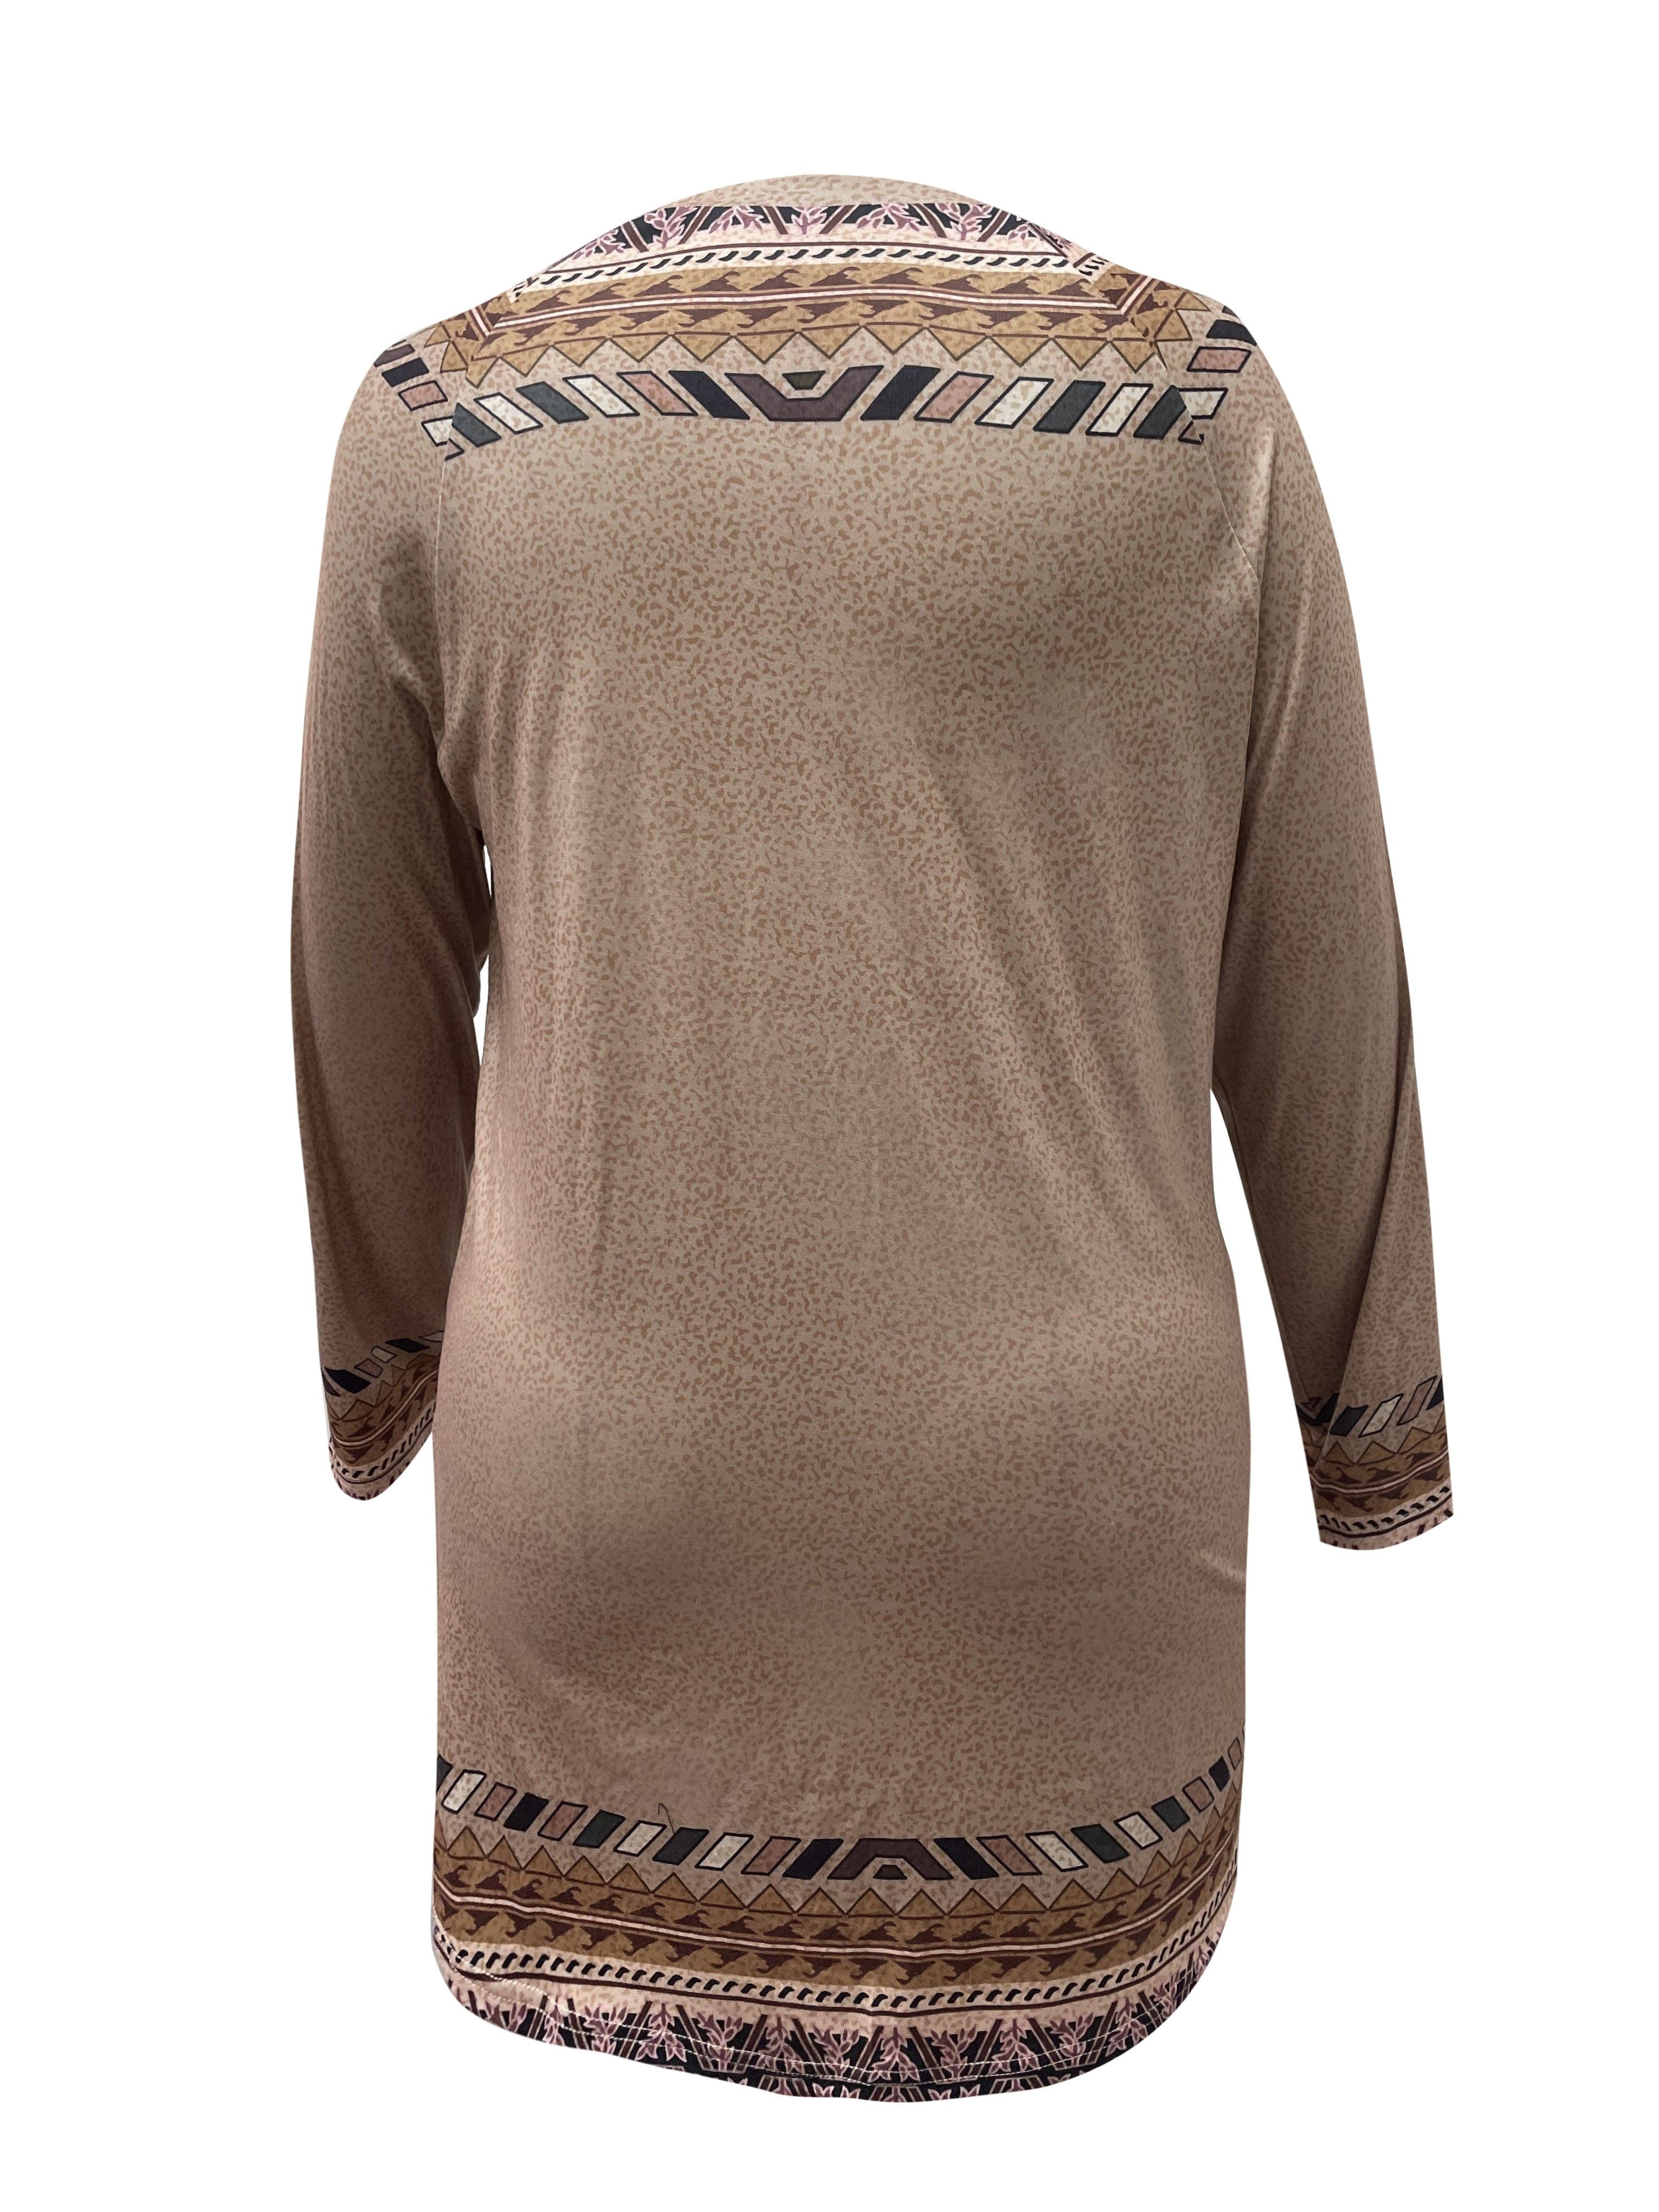 Plus Size Ethnic Style Top, Women's Plus Tribal Feather & Owl & Geometric Print Long Sleeve Round Neck Tunic Top